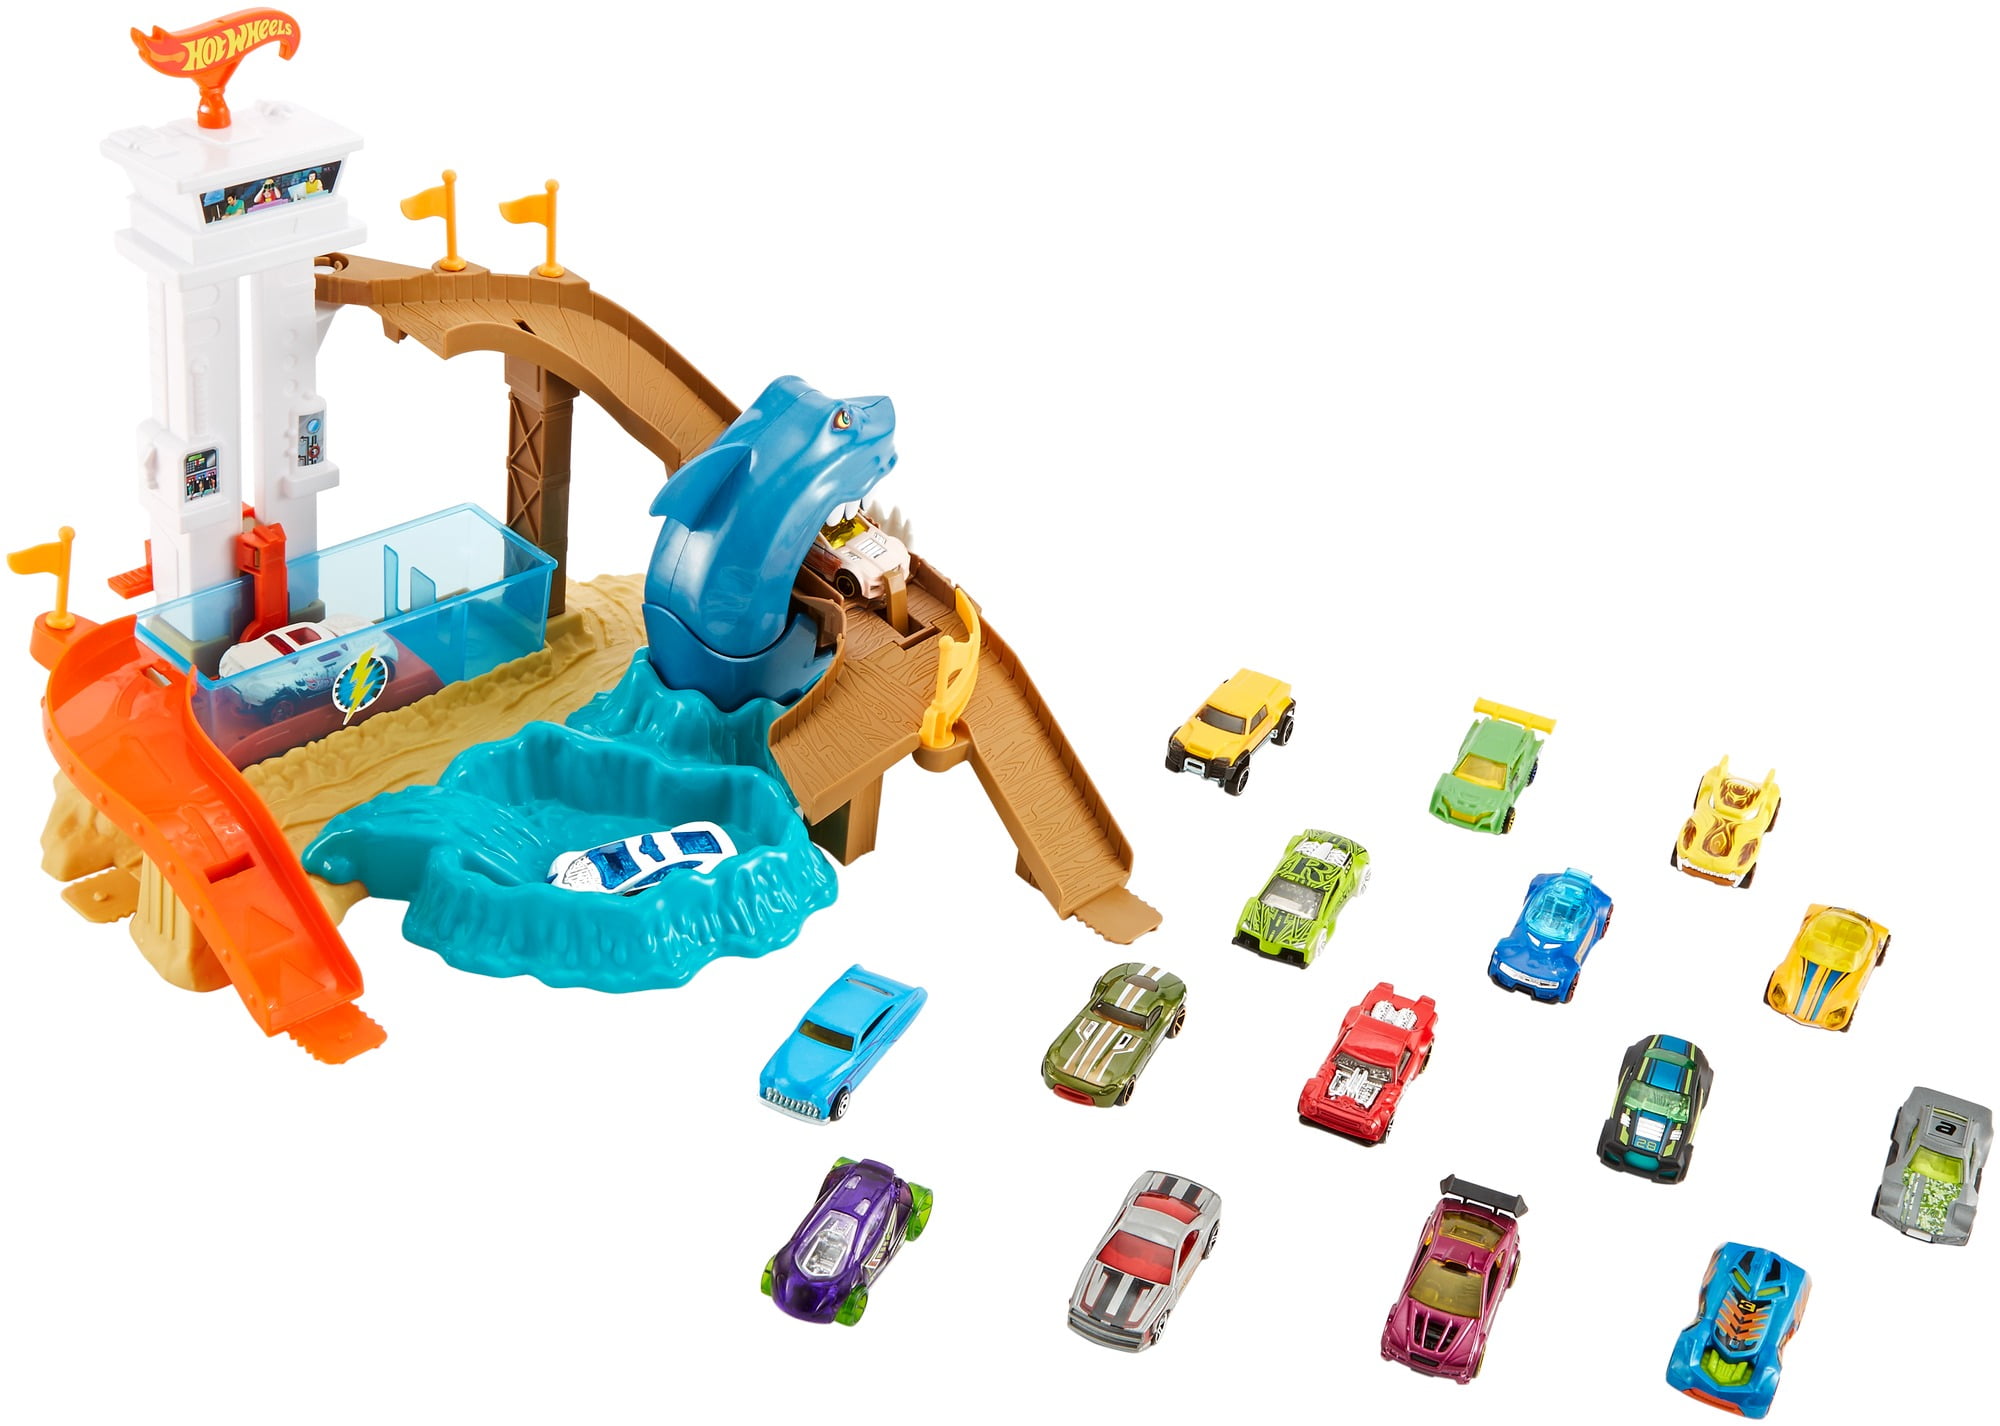 Hot Wheels Mariokart Piranha Plant Slide Track Set Xmax Gift for Kids 3y & Older 